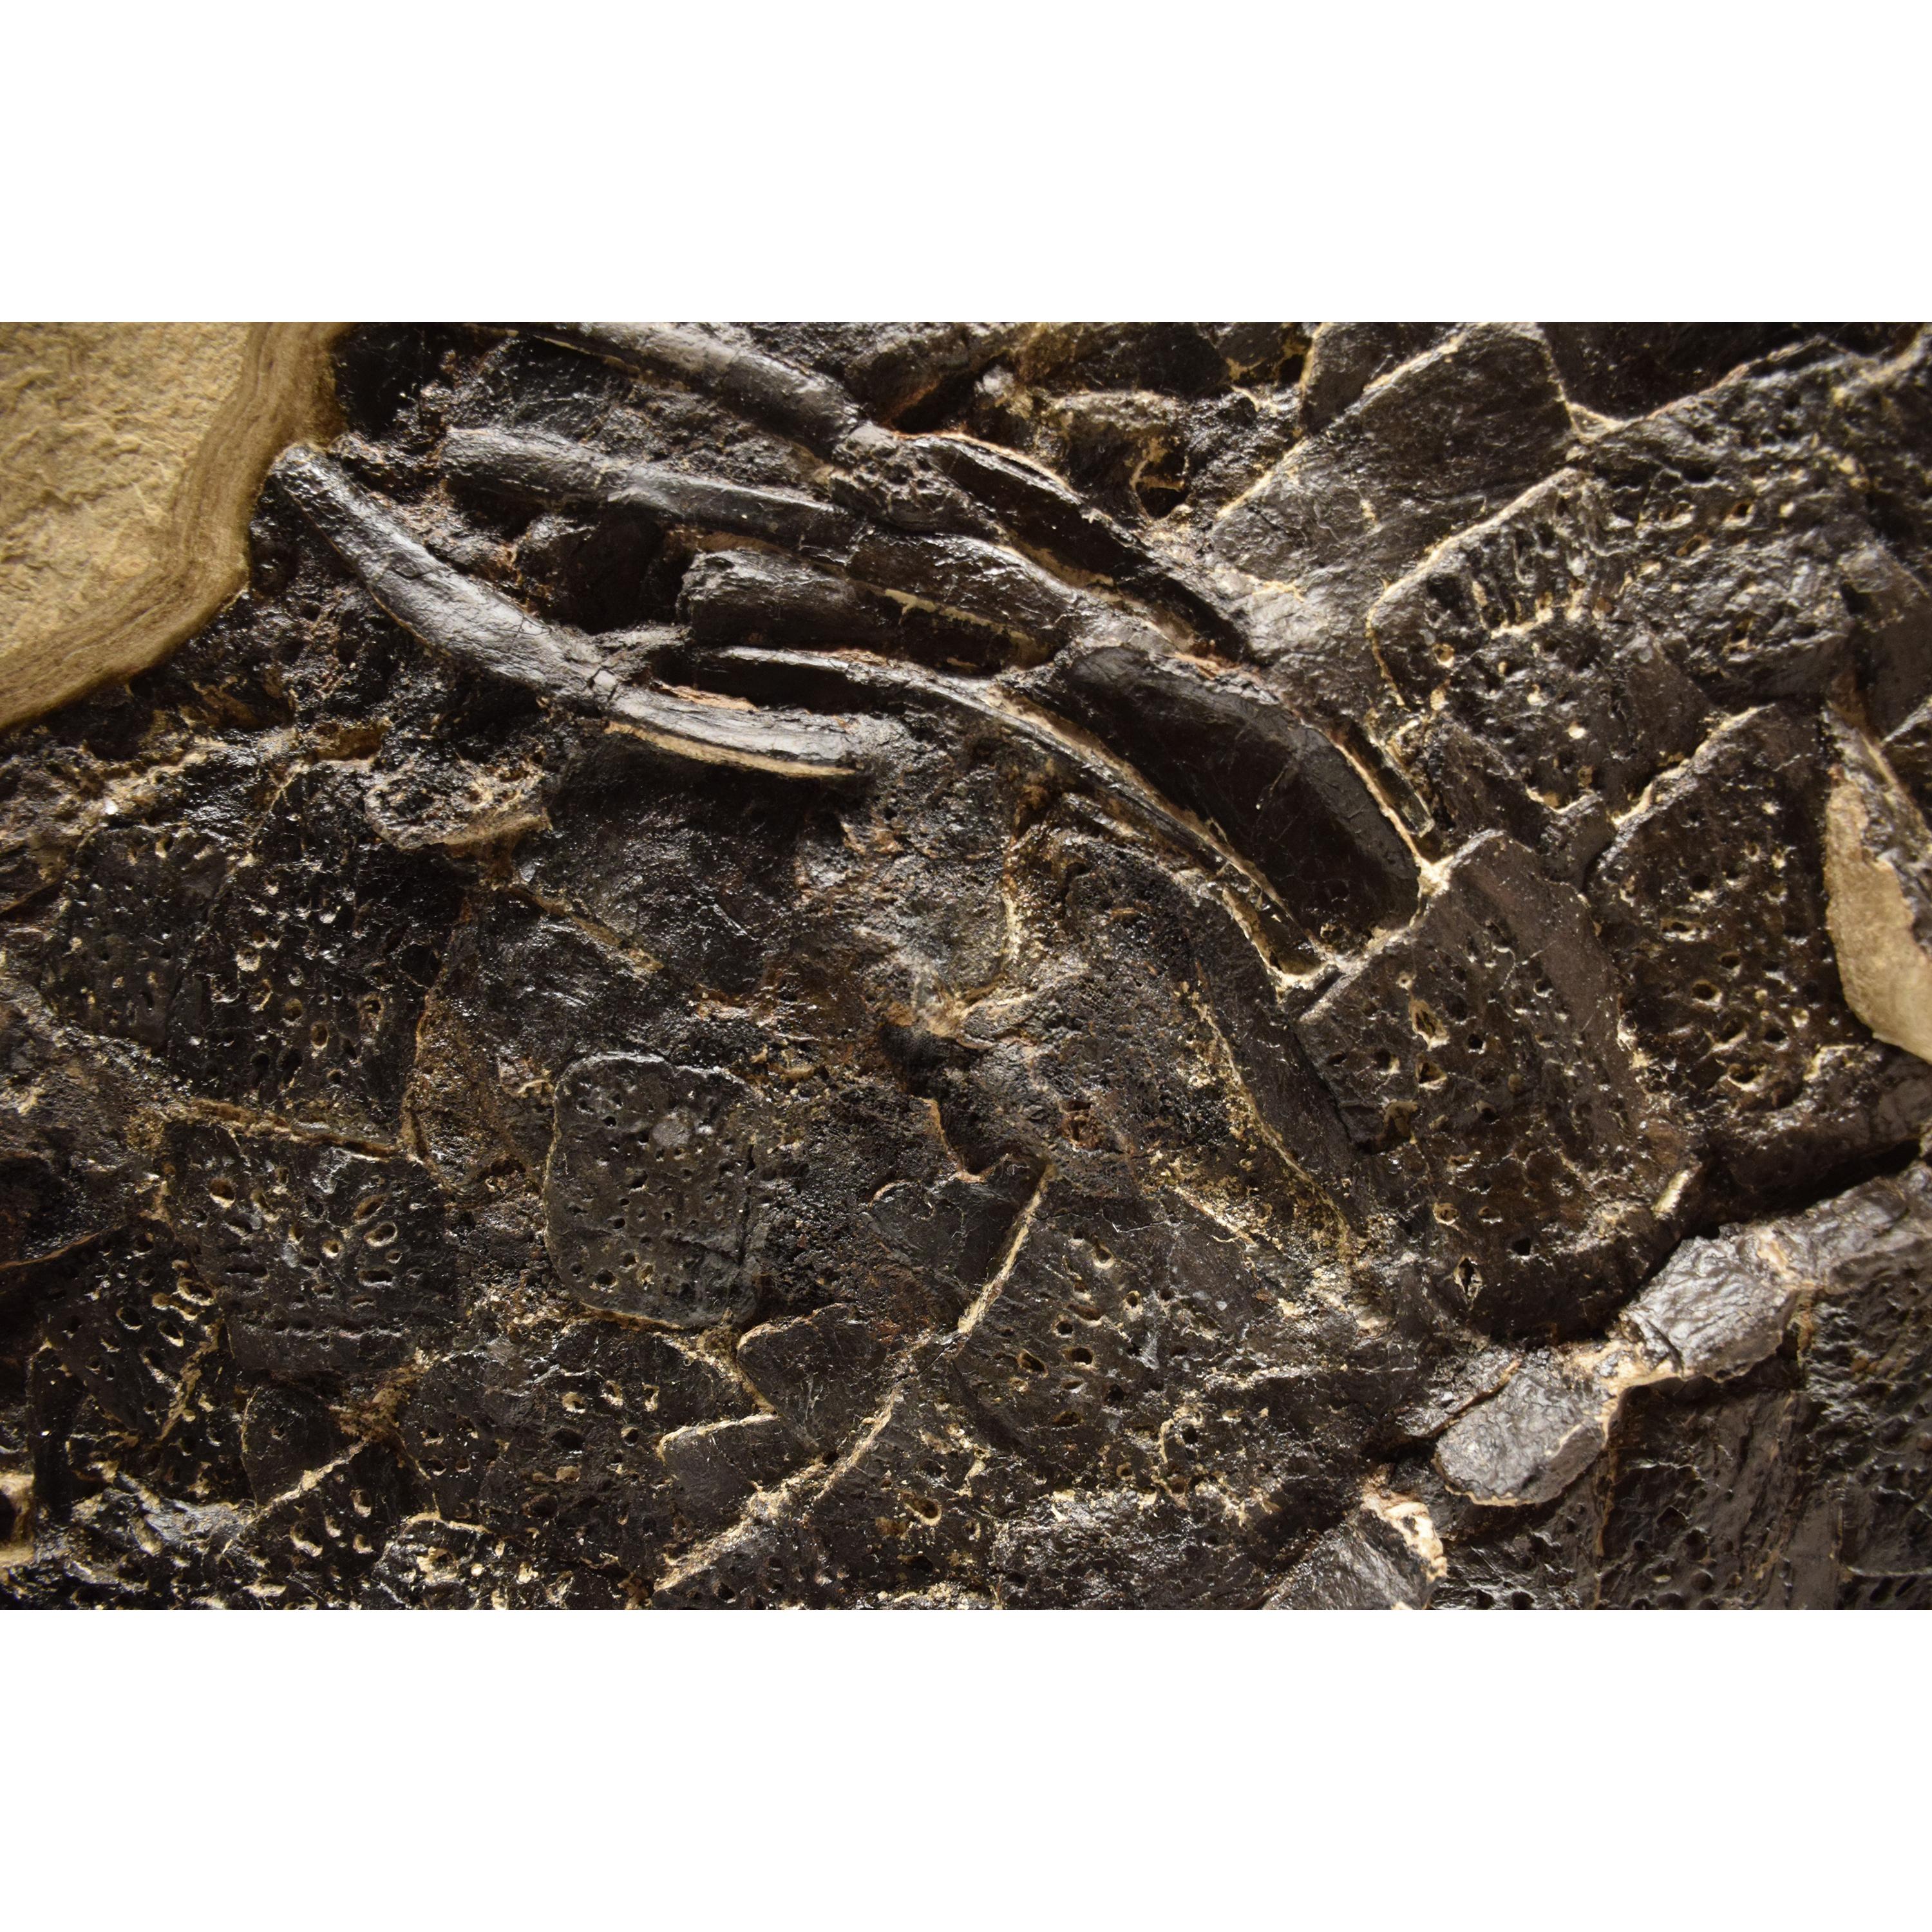 American 50 Million Year Old Eocene Era Fossil Crocodile Specimen in Stone, from Wyoming